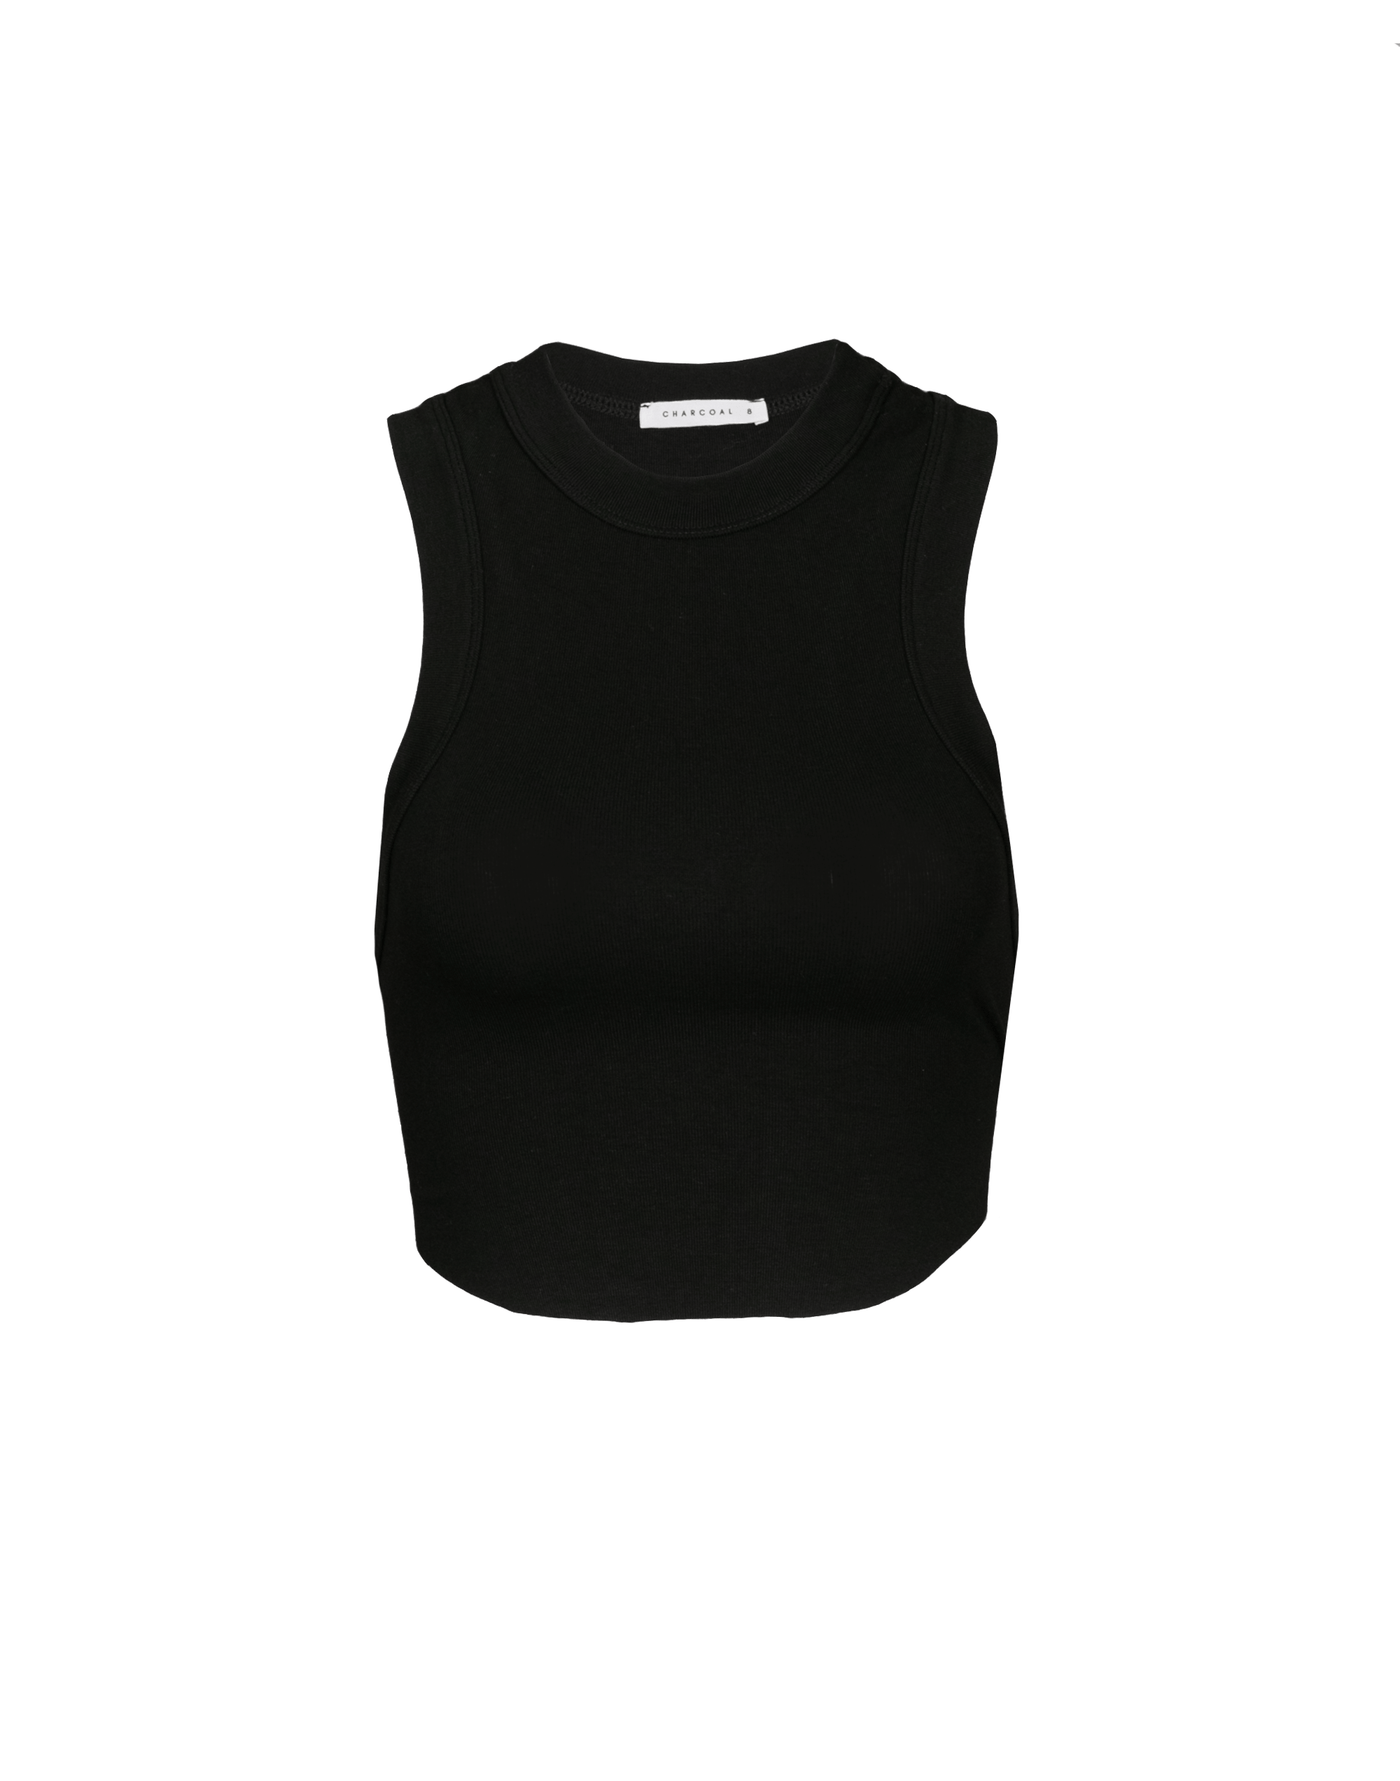 Hailee Tank Top (Black) - Black Tank Top - Women's Top - Charcoal Clothing